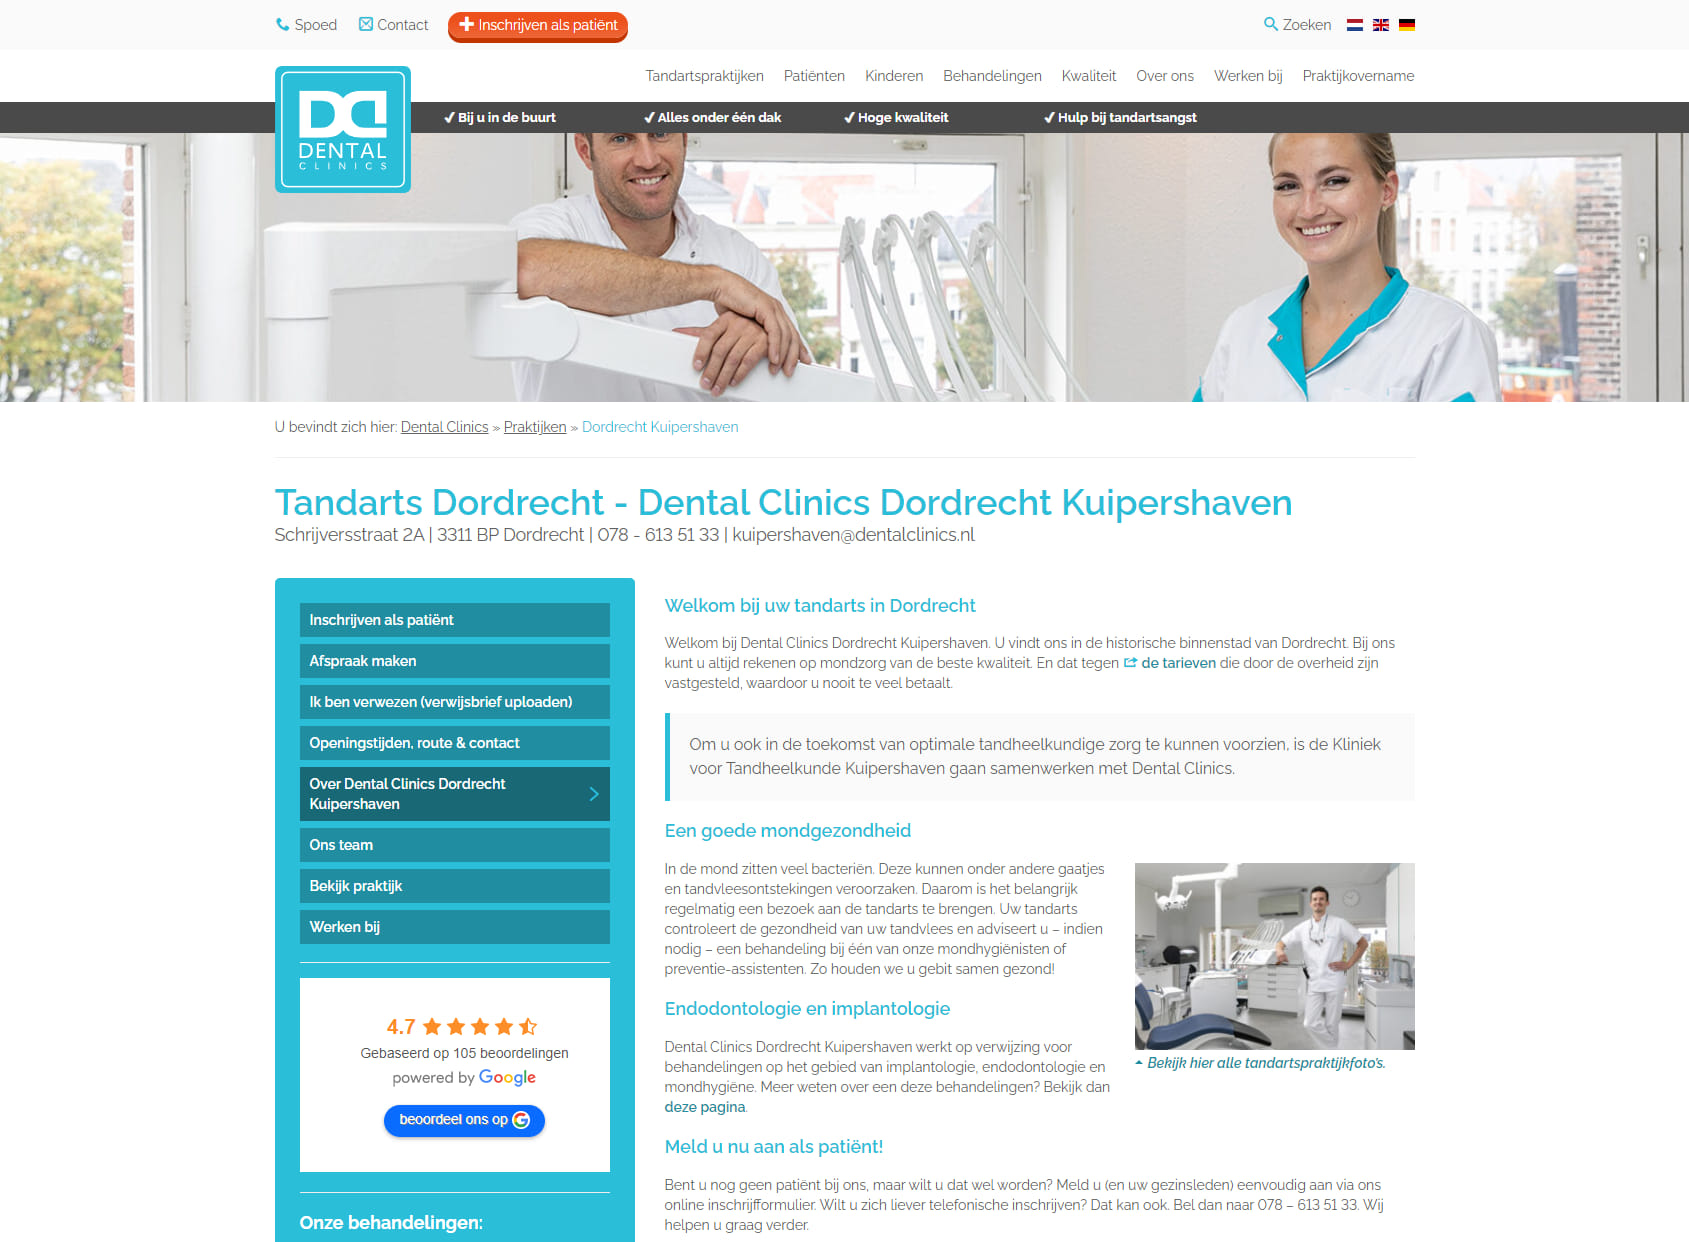 Dental Clinics Dordrecht Kuipershaven